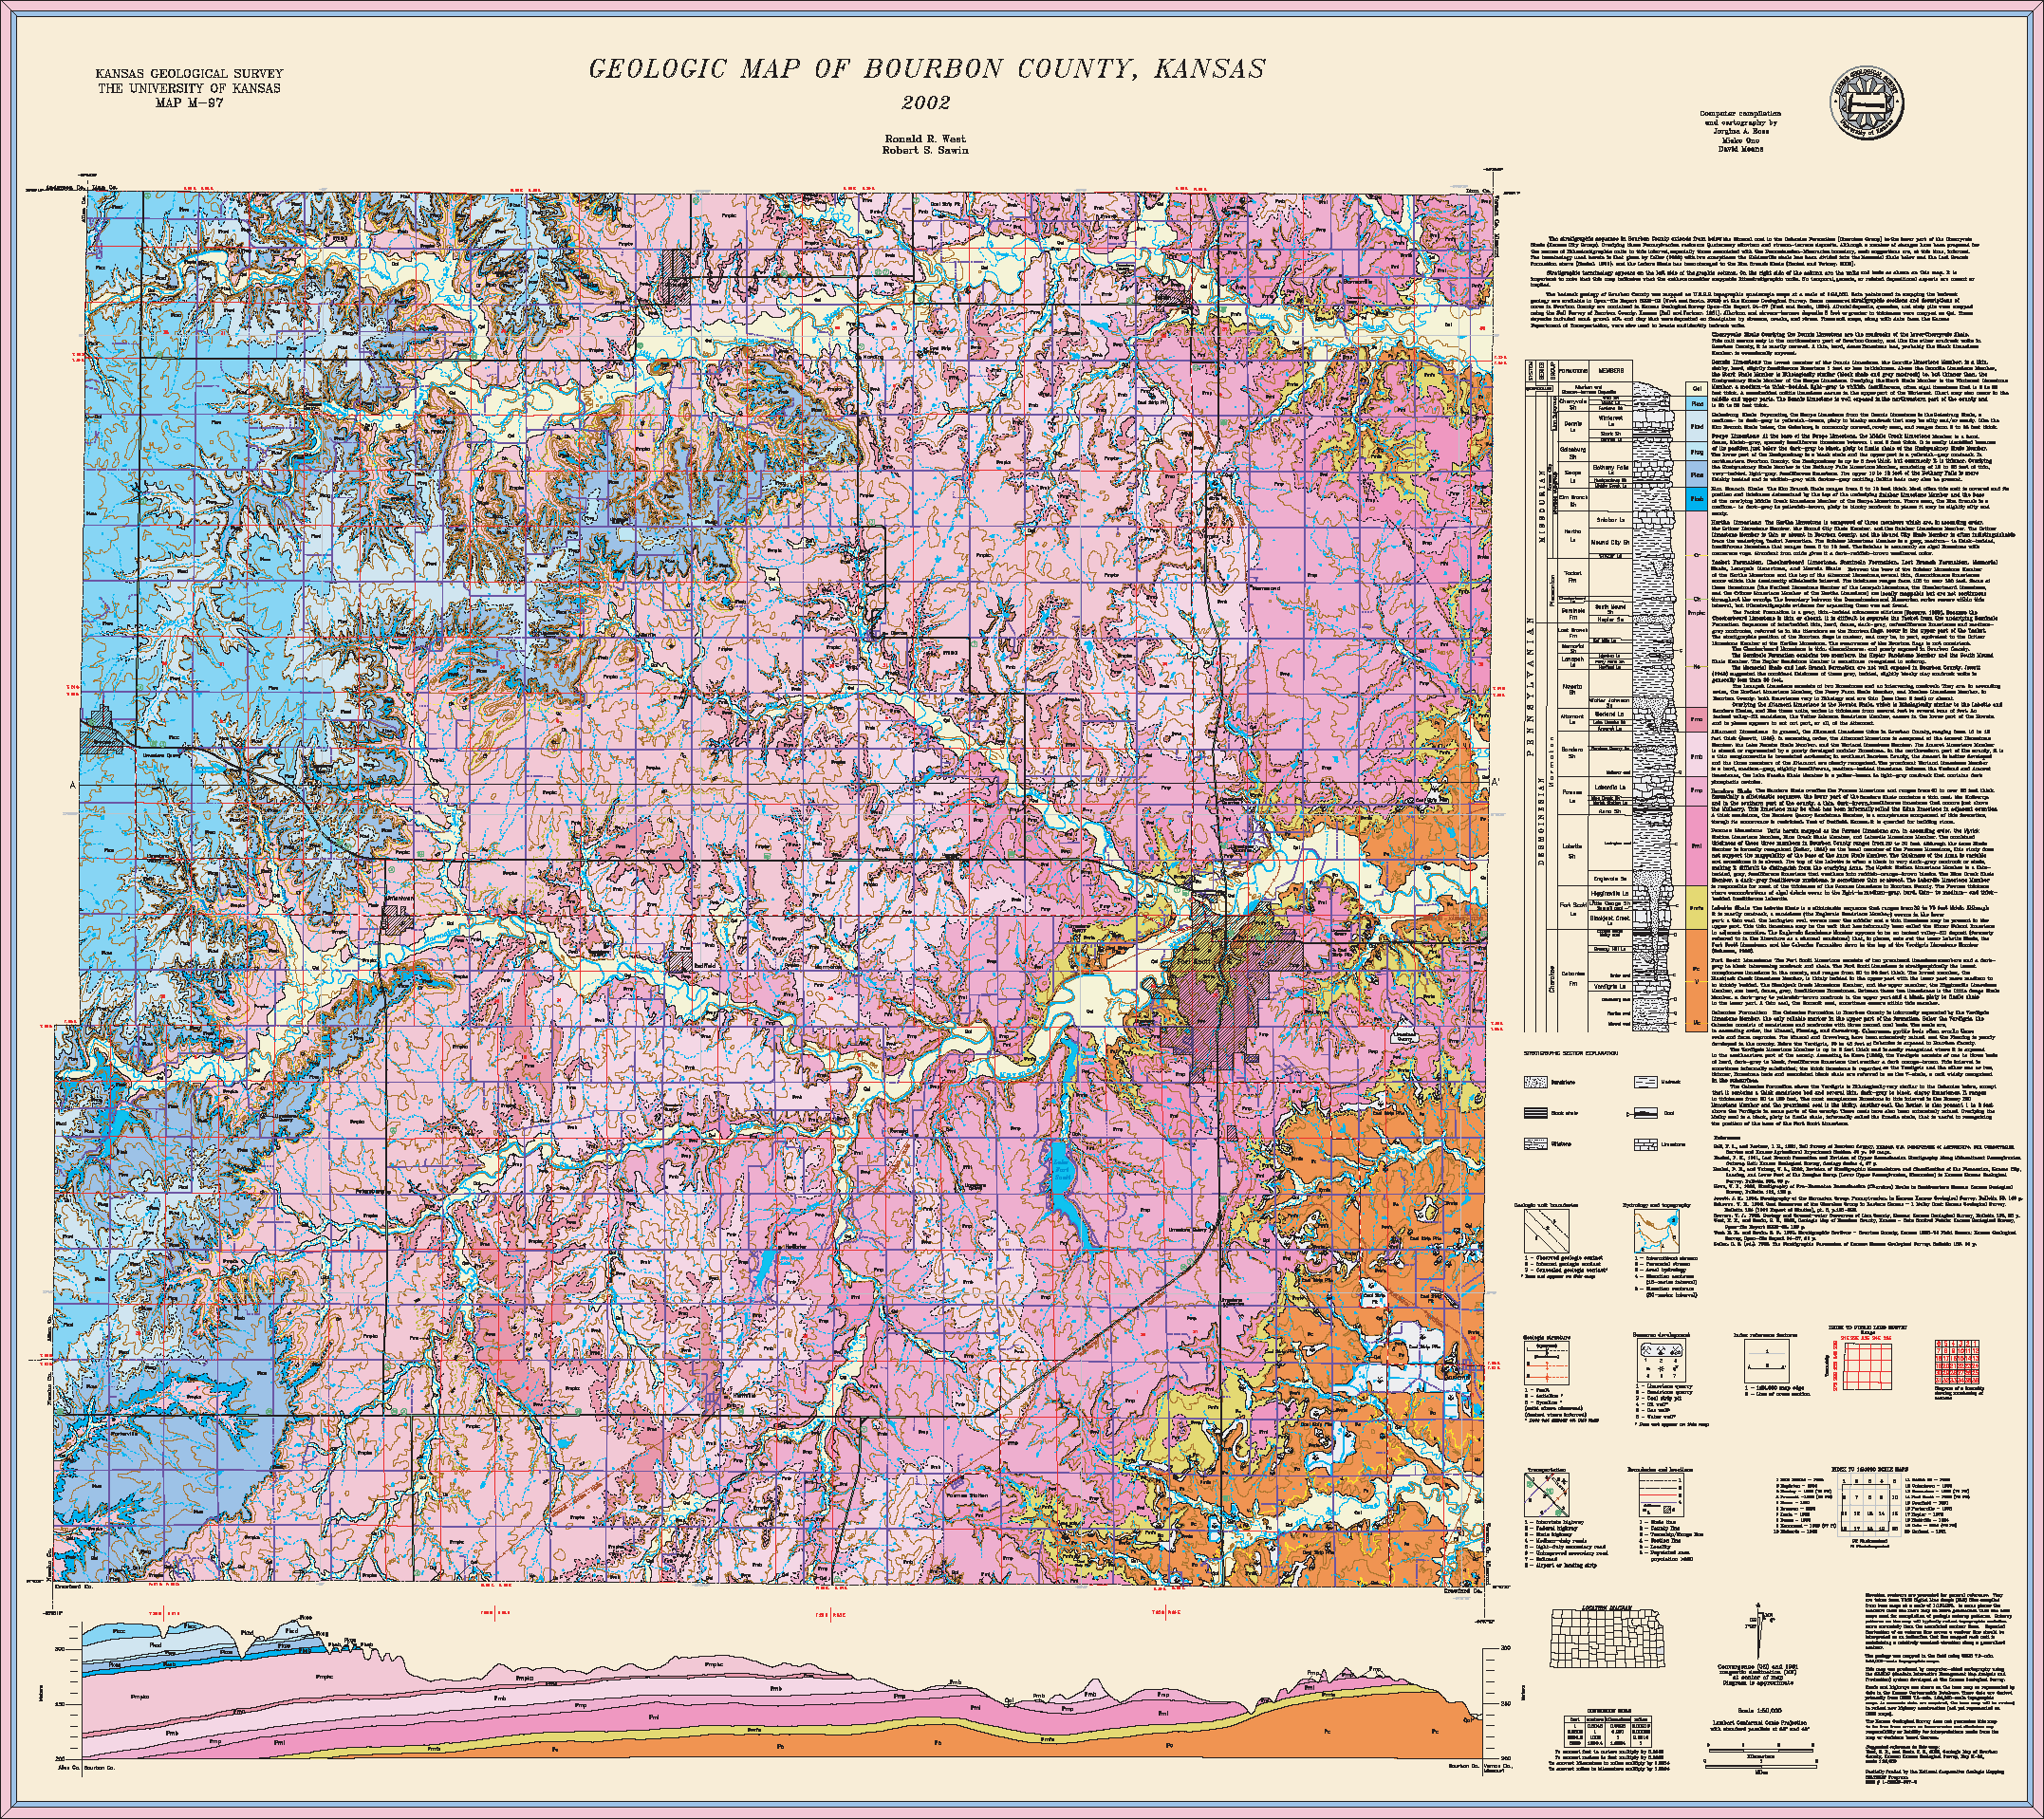 Bourbon County geologic map